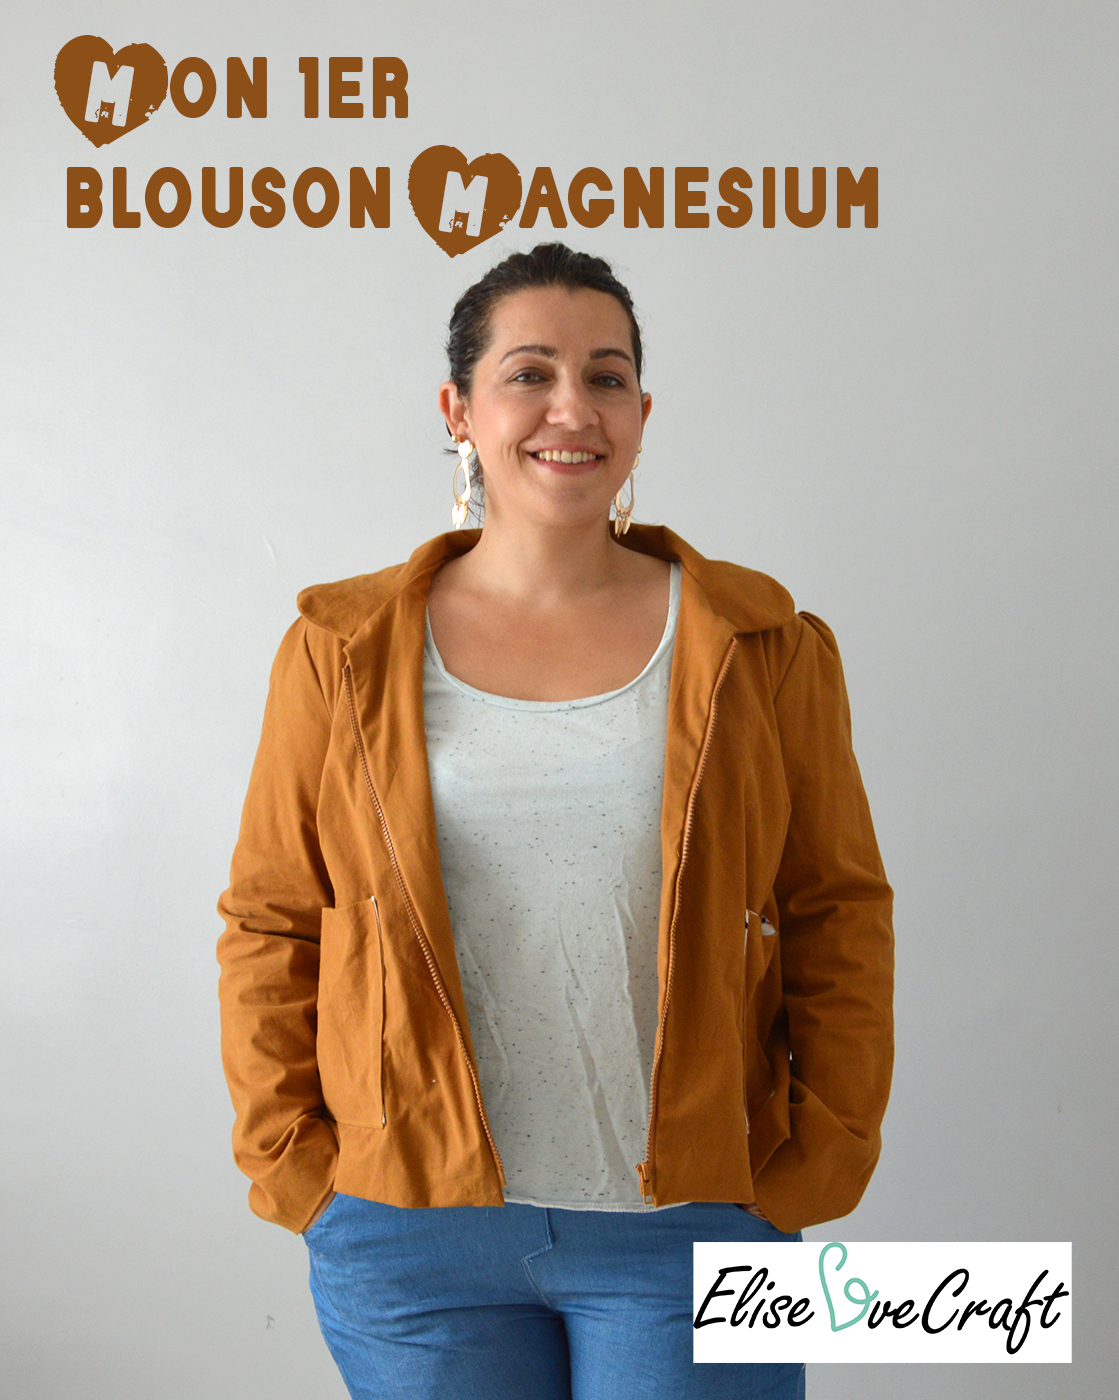 blouson Magnesium pin-it